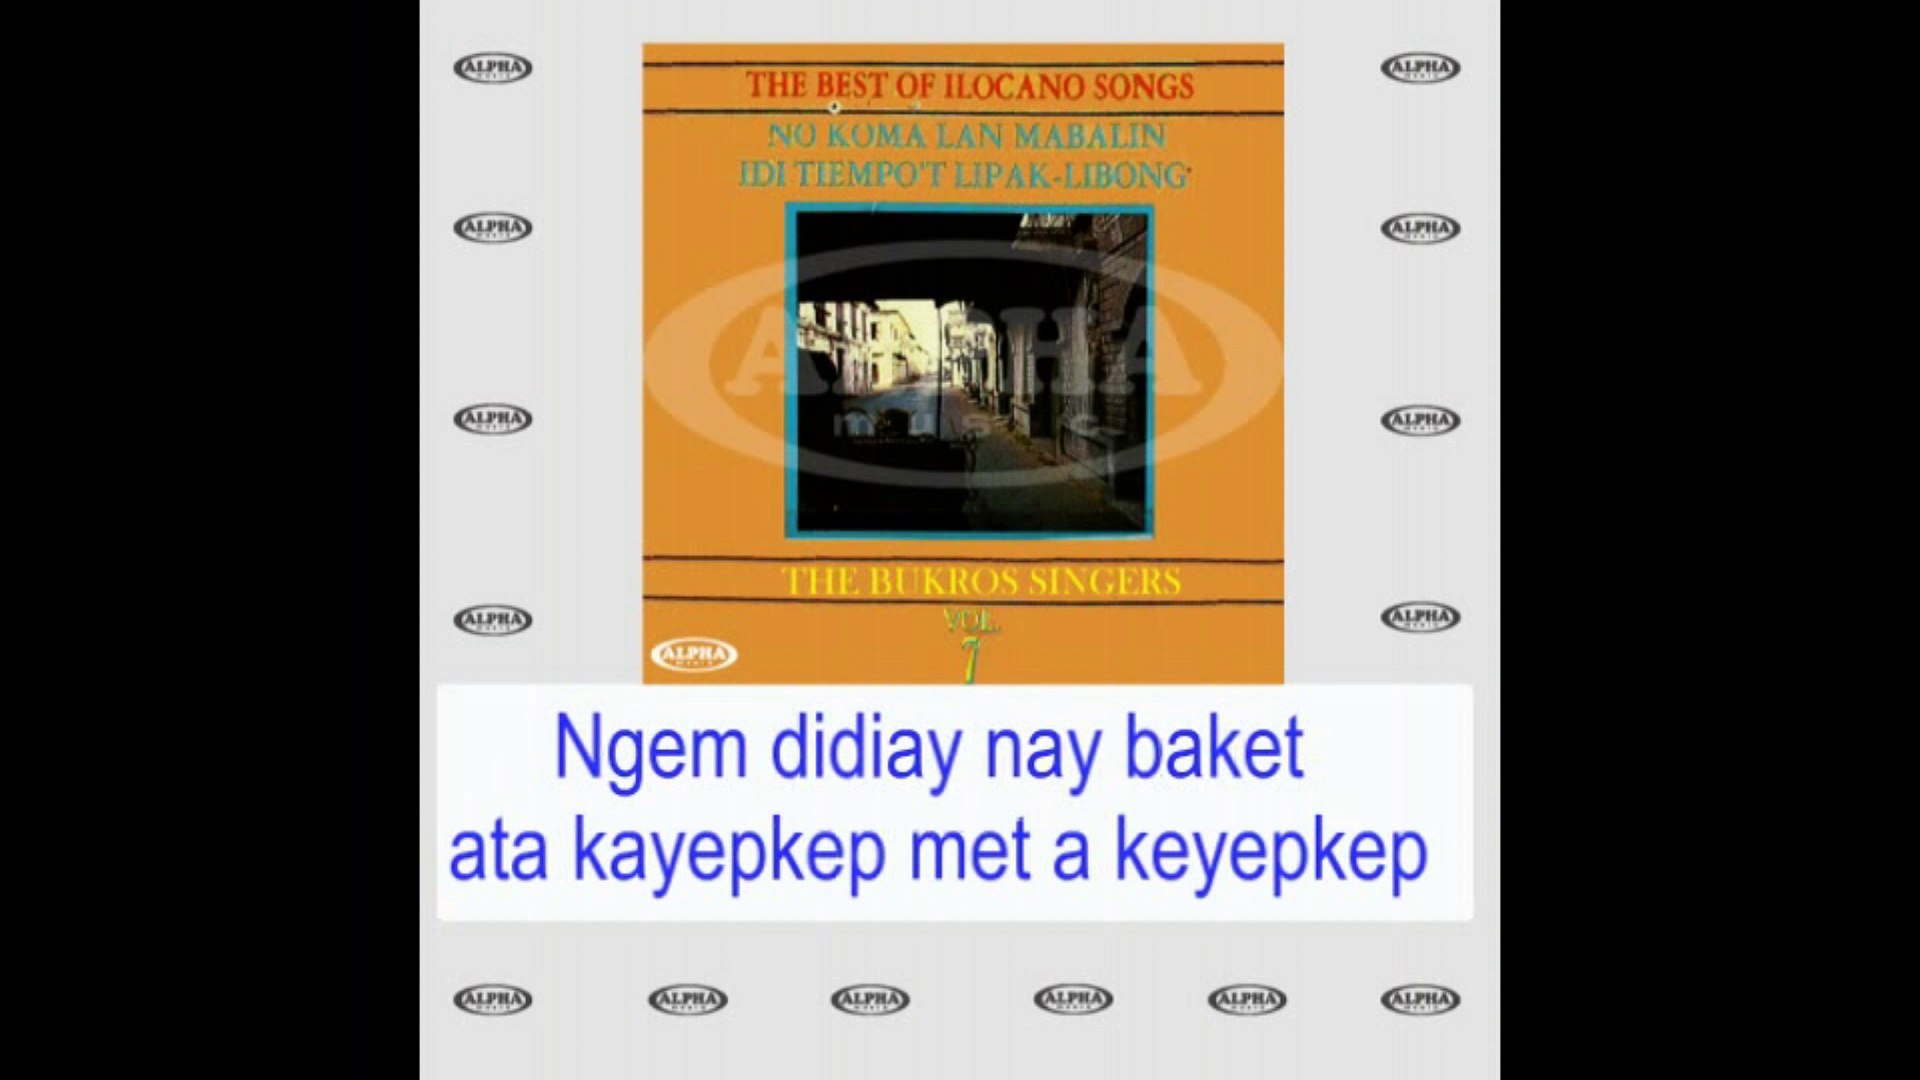 Bukros Singers - Idi Tiempo't Lipak-Libong (Lyrics Video)